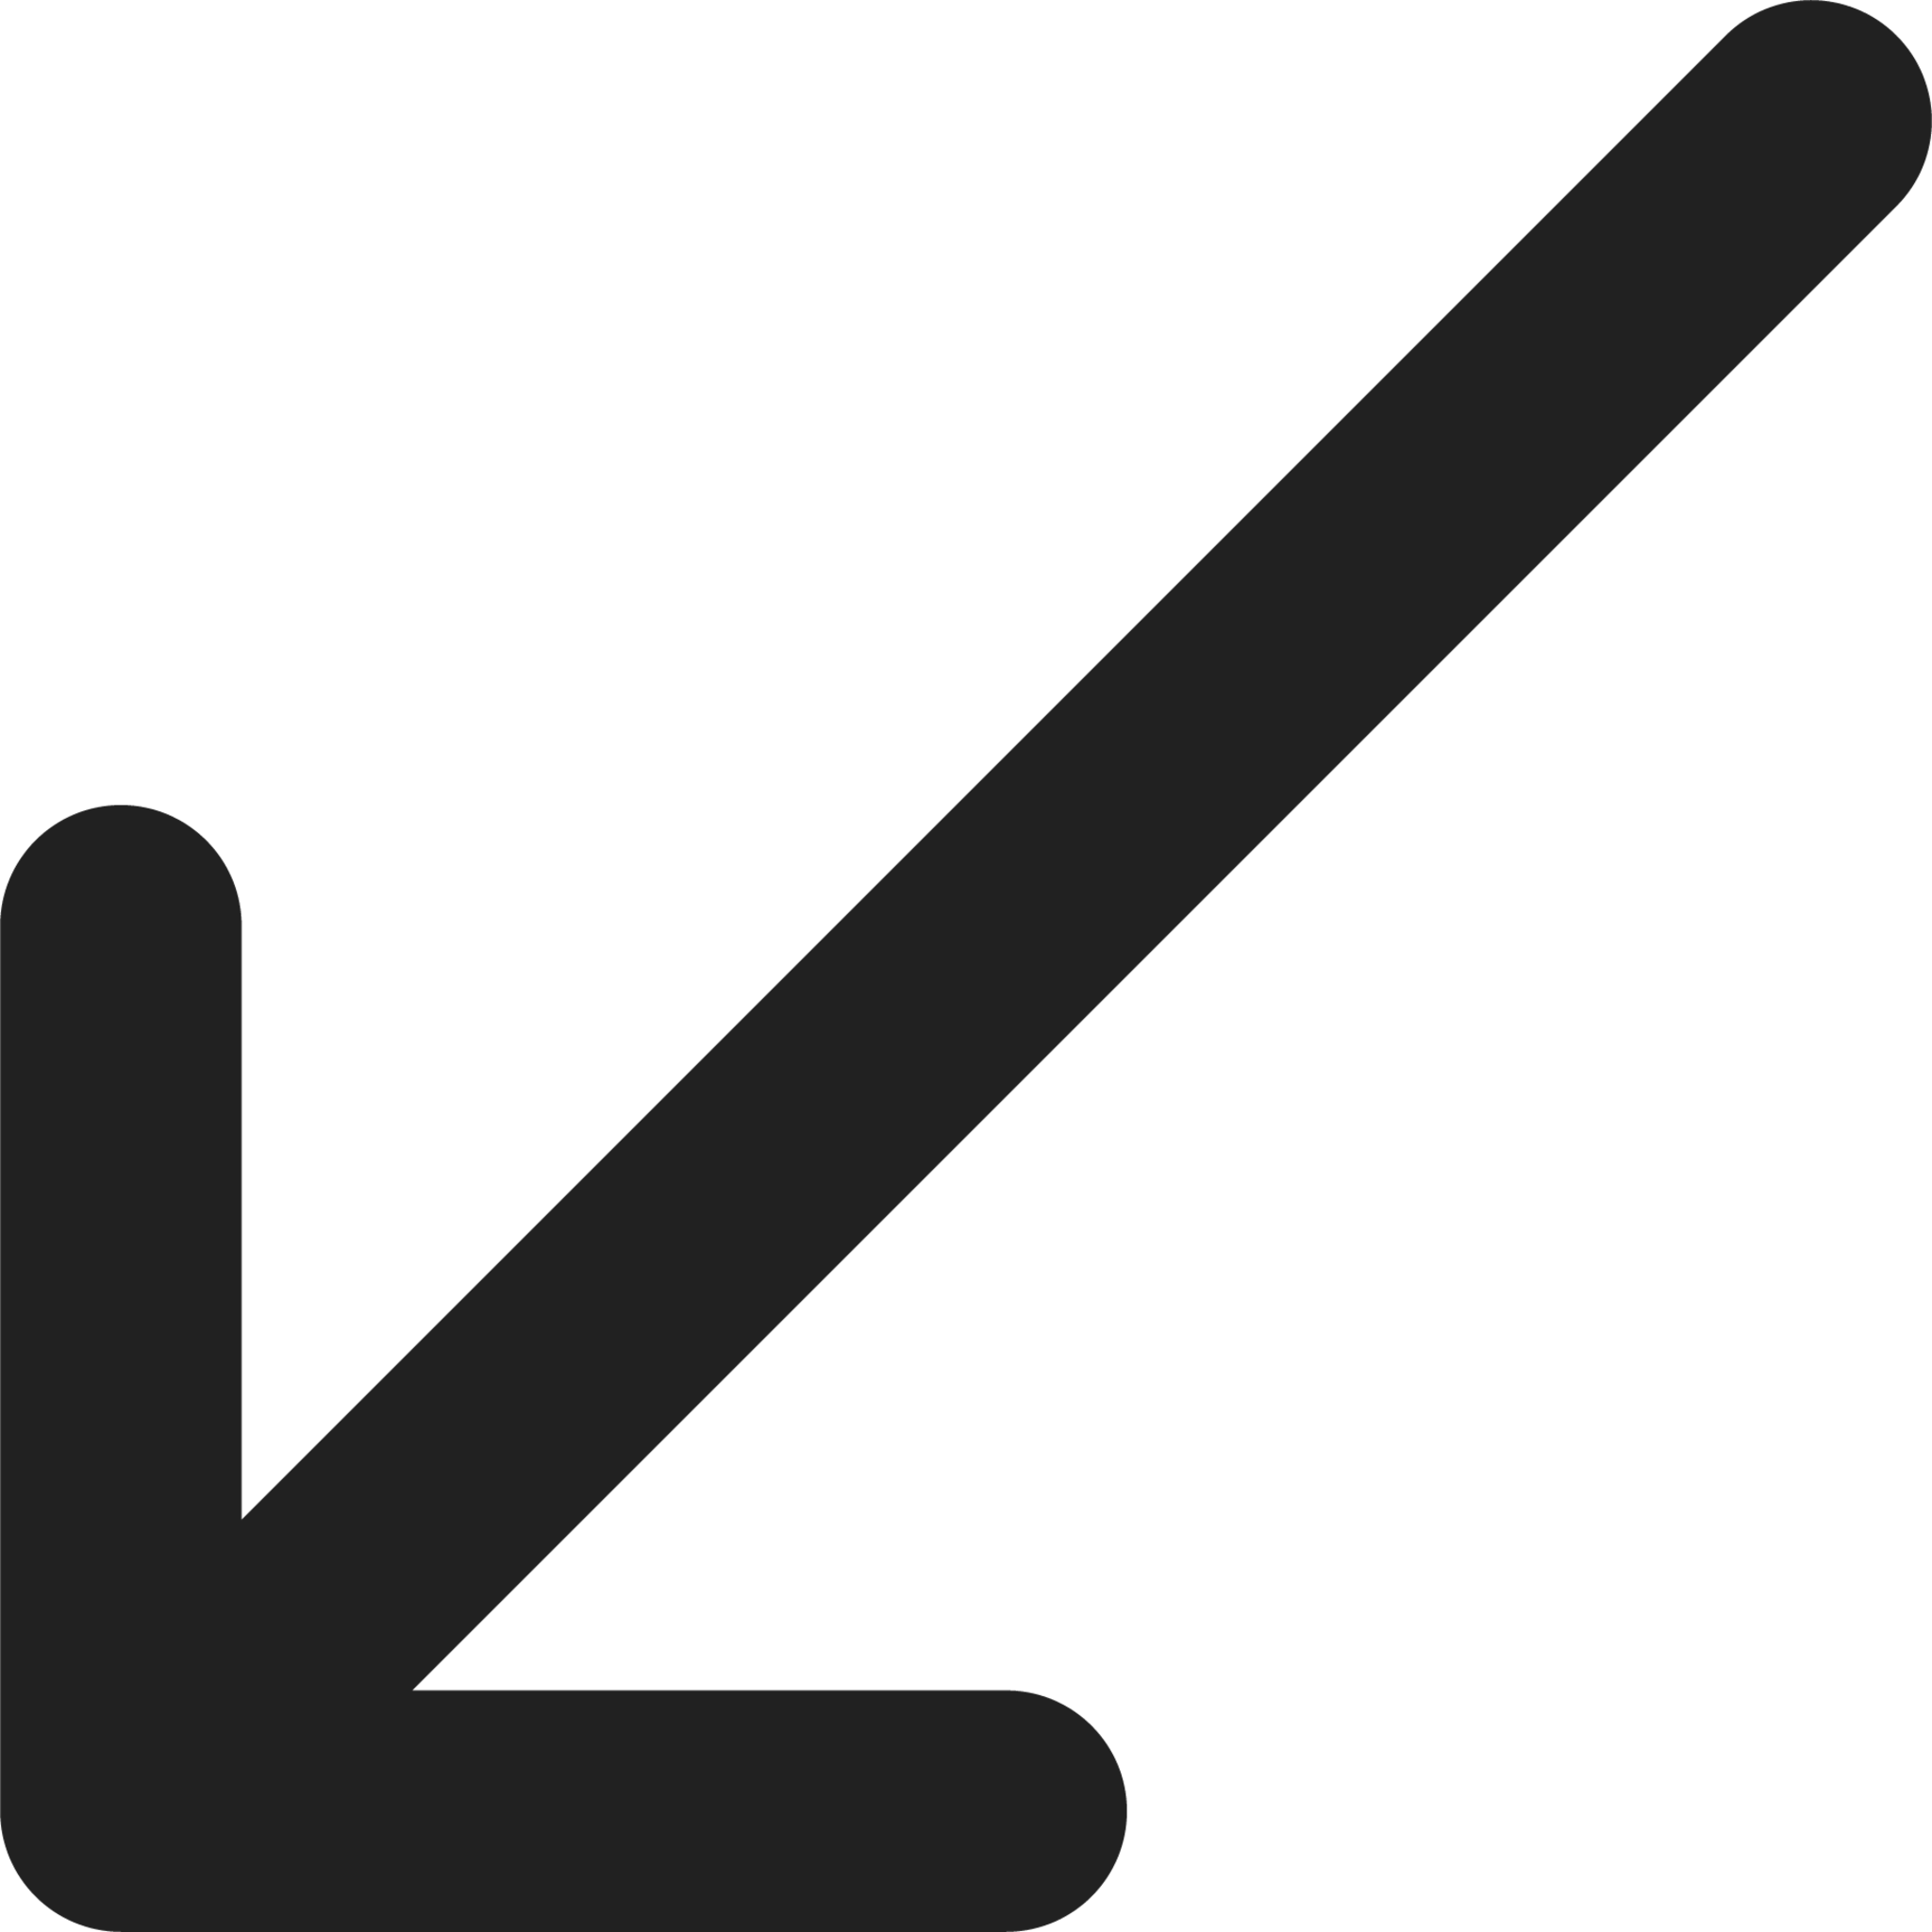 Arrow Down Left icon